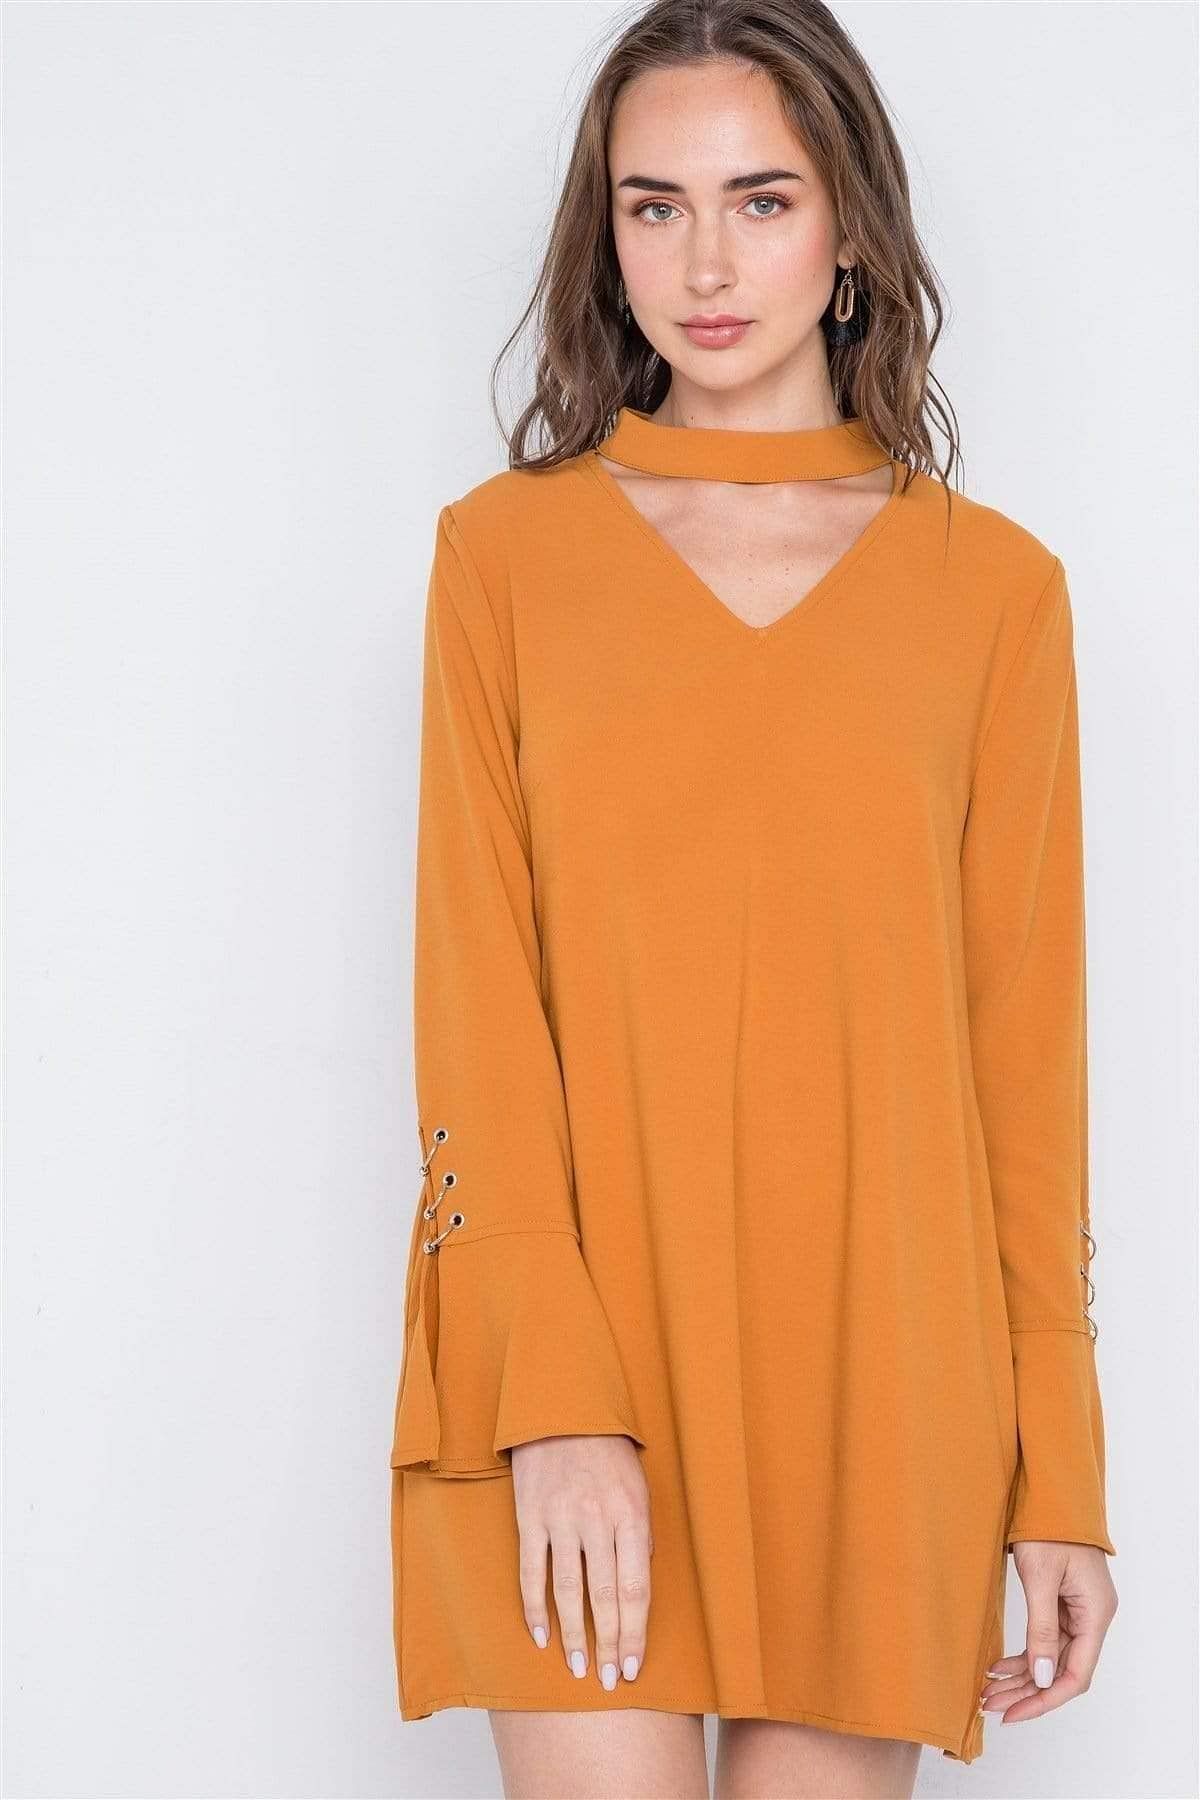 Camel Long Sleeve V-Neck Mini Dress - Shopping Therapy, LLC dress